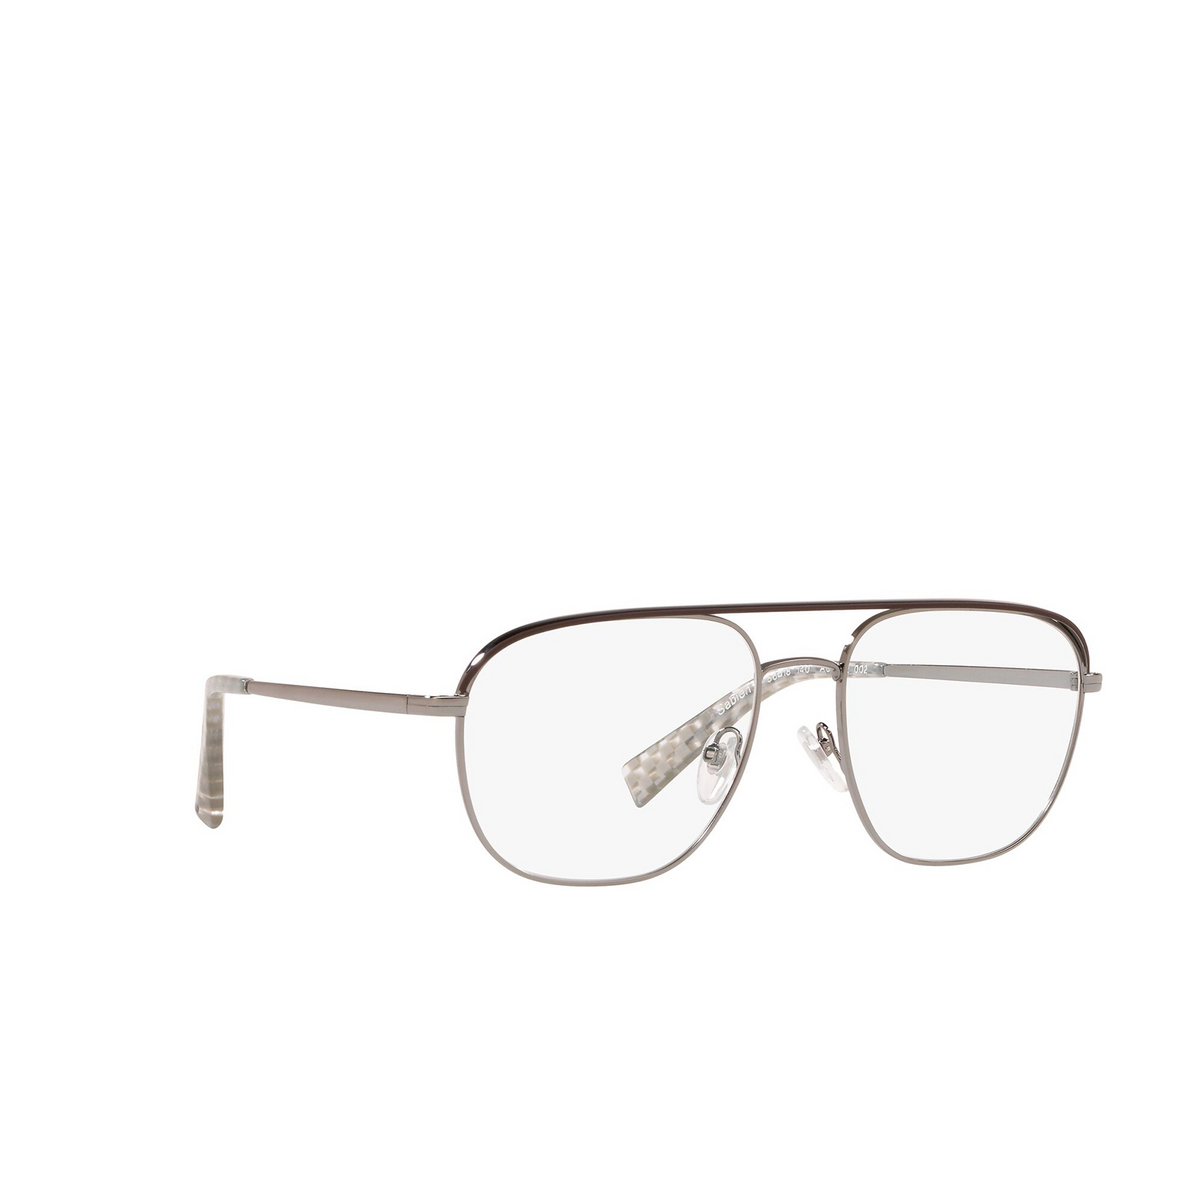 Alain Mikli® Aviator Eyeglasses: Sabien A02042 color Gunmetal / Matte Brown 002 - three-quarters view.